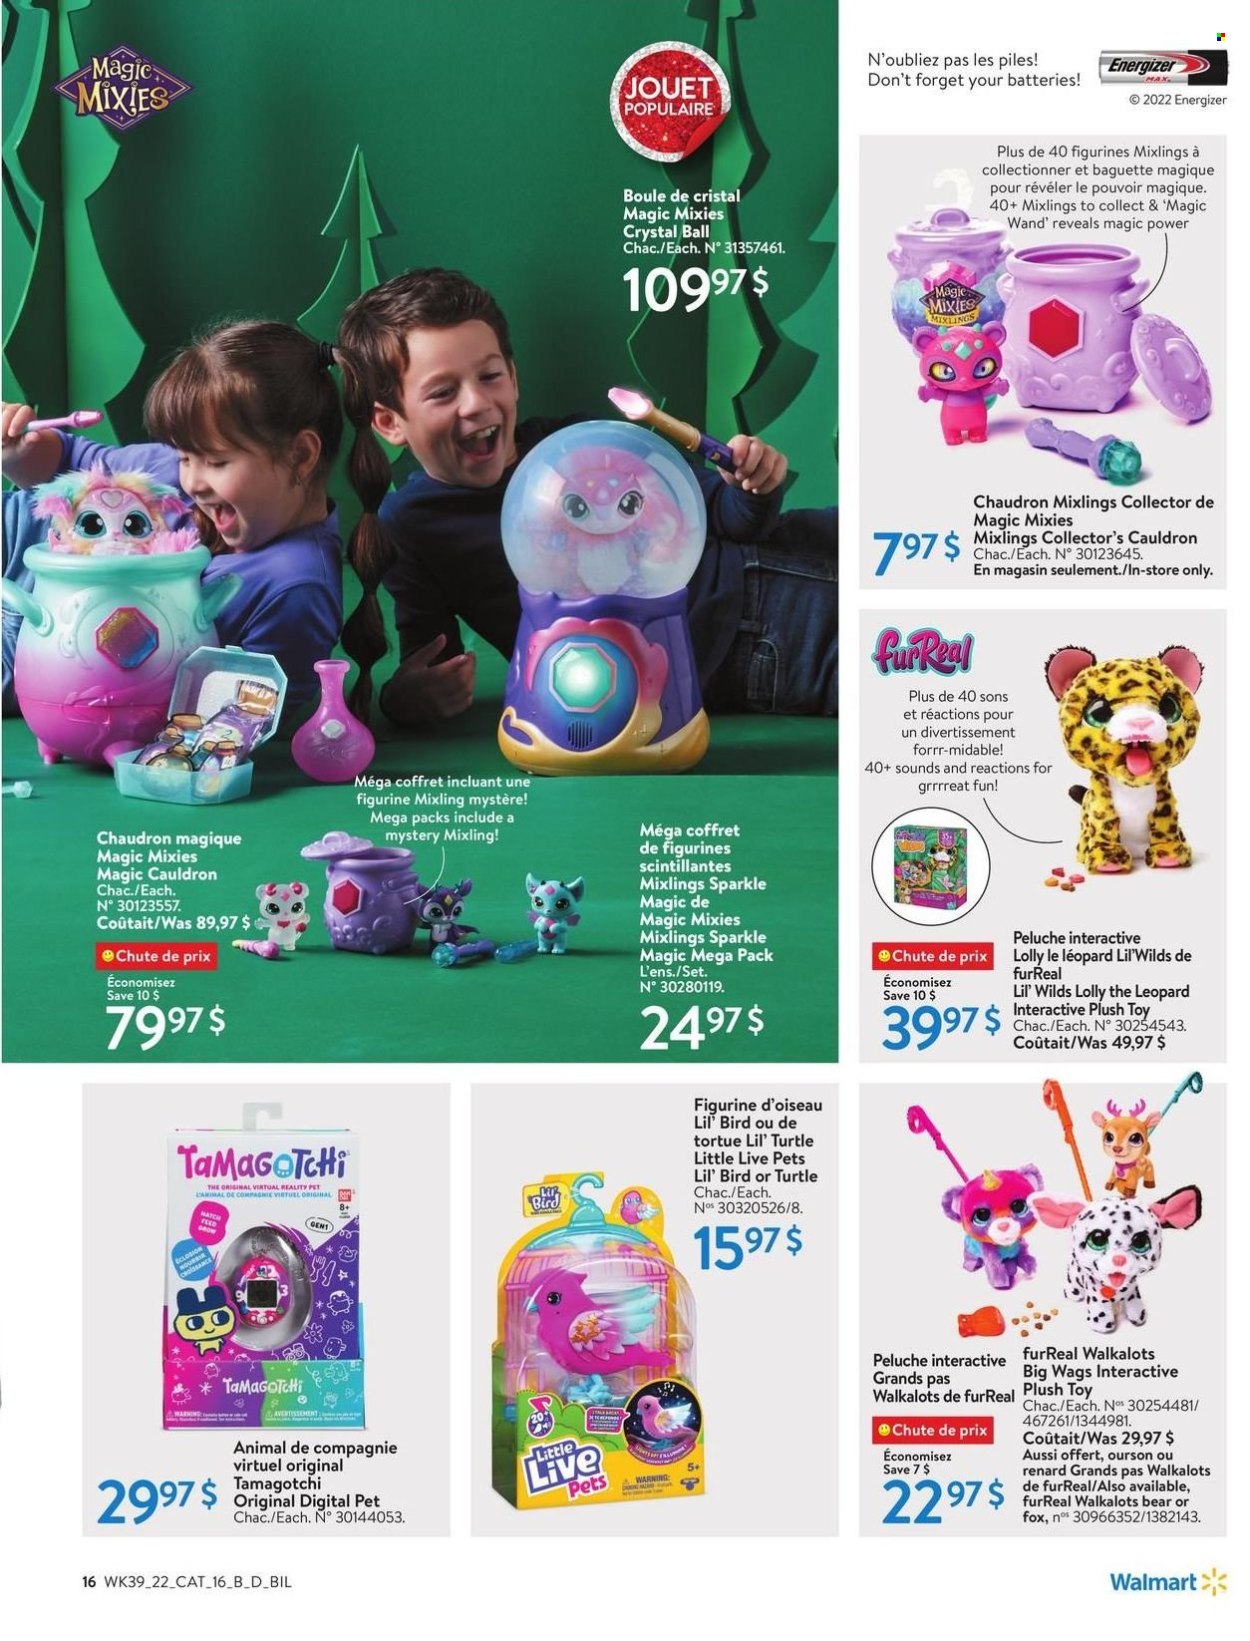 thumbnail - Walmart Flyer - October 20, 2022 - December 24, 2022 - Sales products - lollipop, digital pet, FurReal, toys, Little Live Pets, baguette, Energizer. Page 16.